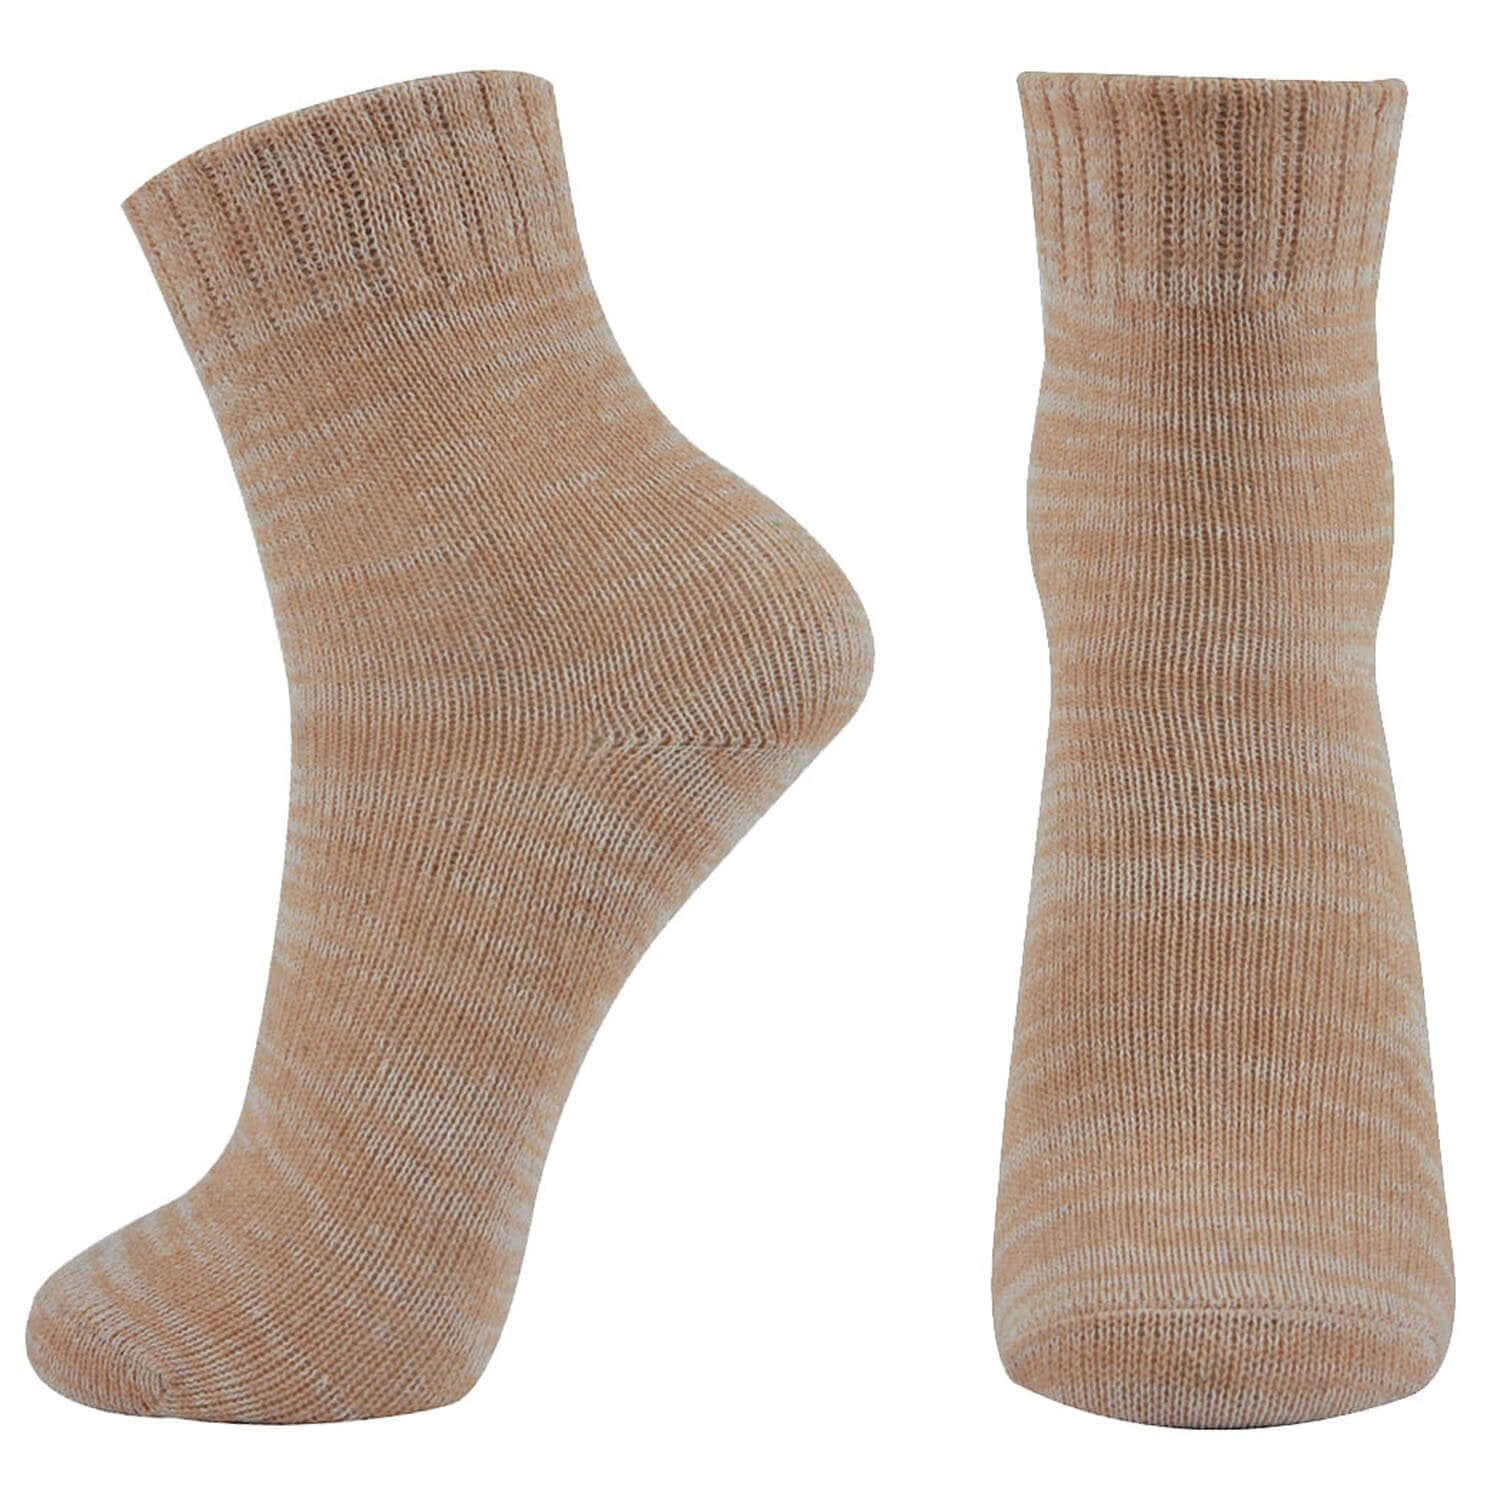 AAS Mixed Color Vintage Crew Socks Christmas 4Pack - Wool Socks - Comfort-fresh.com